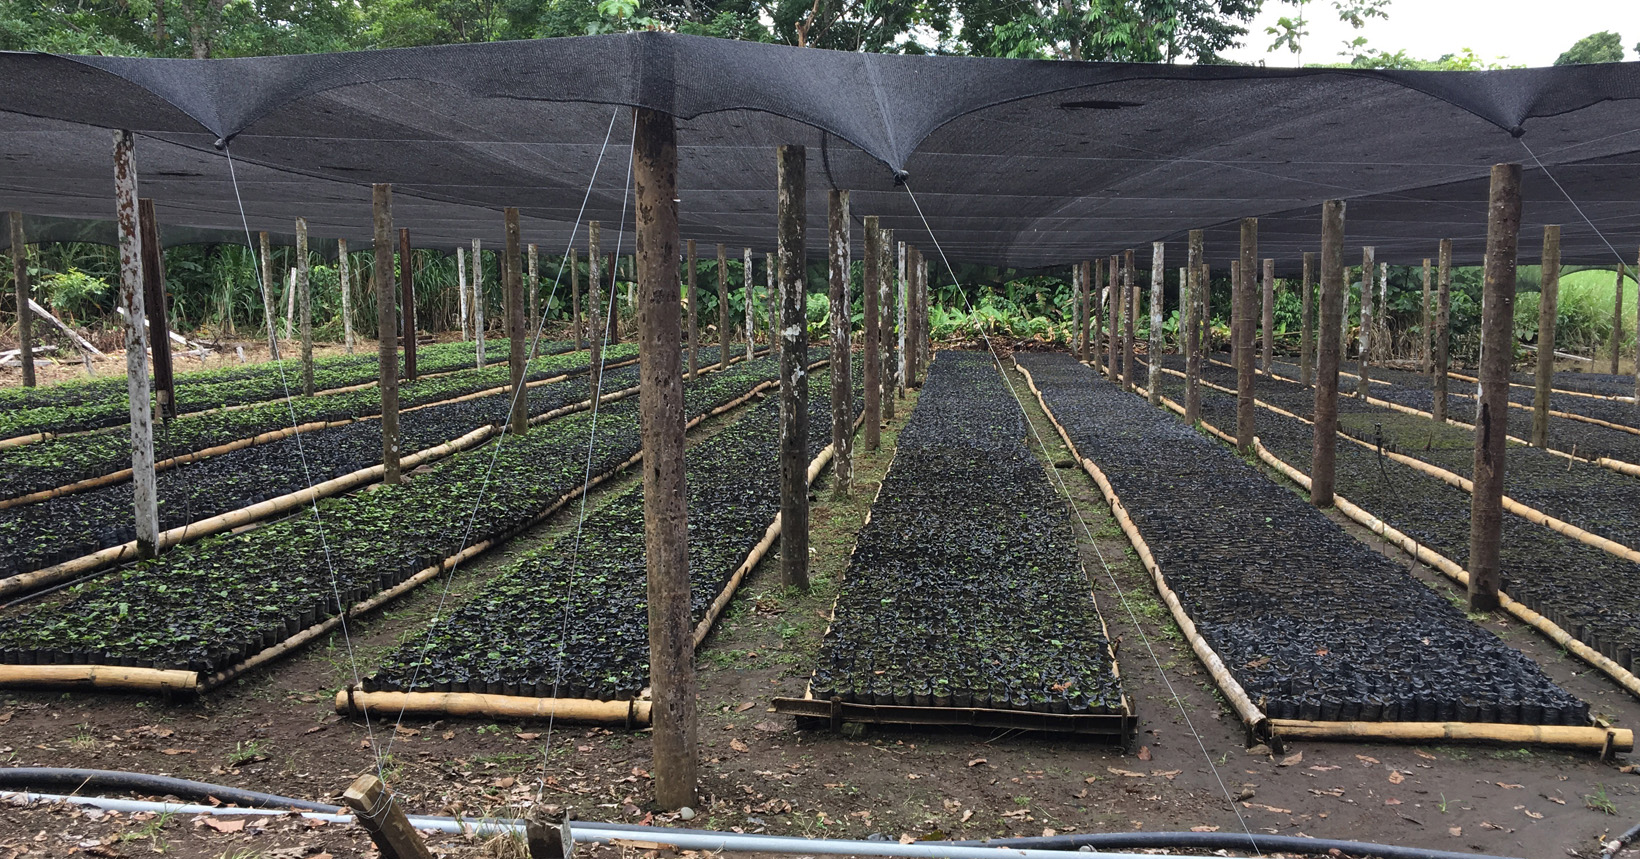 Rows of new coffee seedlings sit nestled under black tarps in rows.